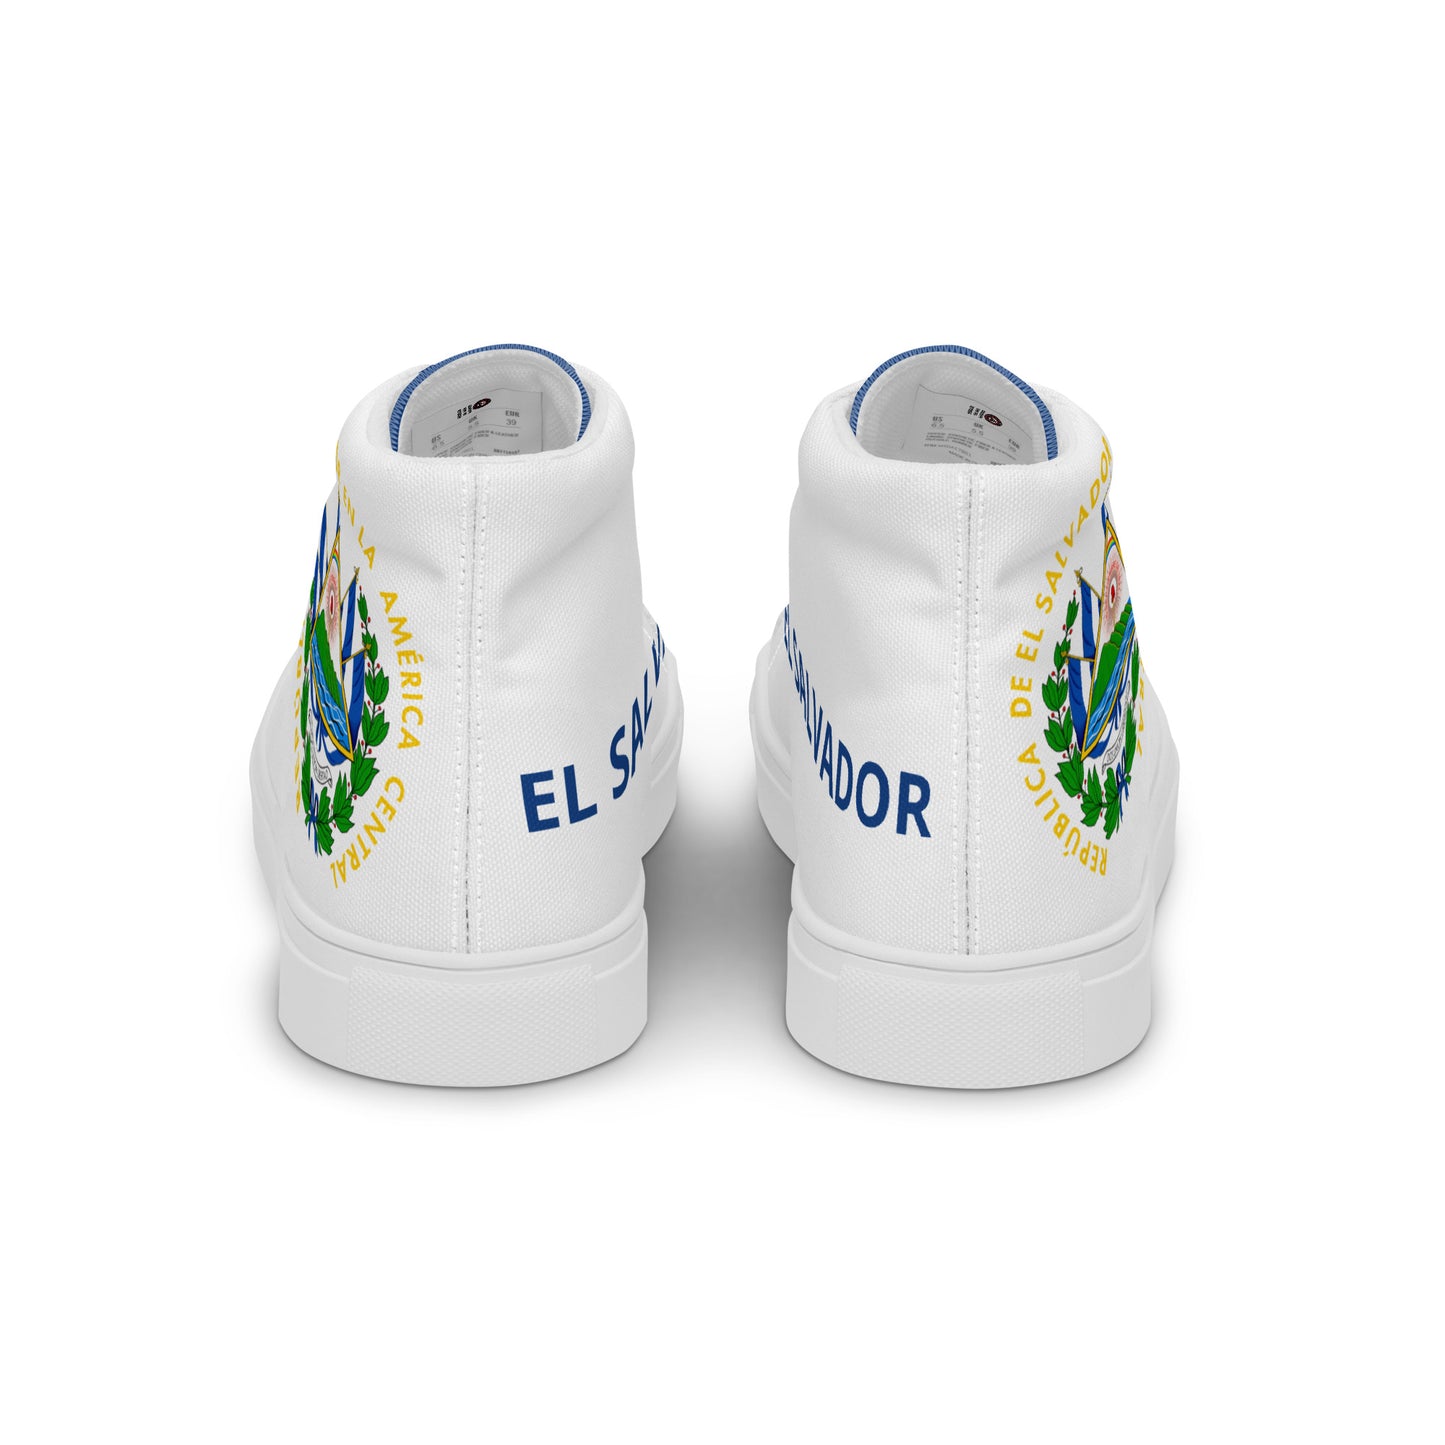 El Salvador - Women - White - High top shoes